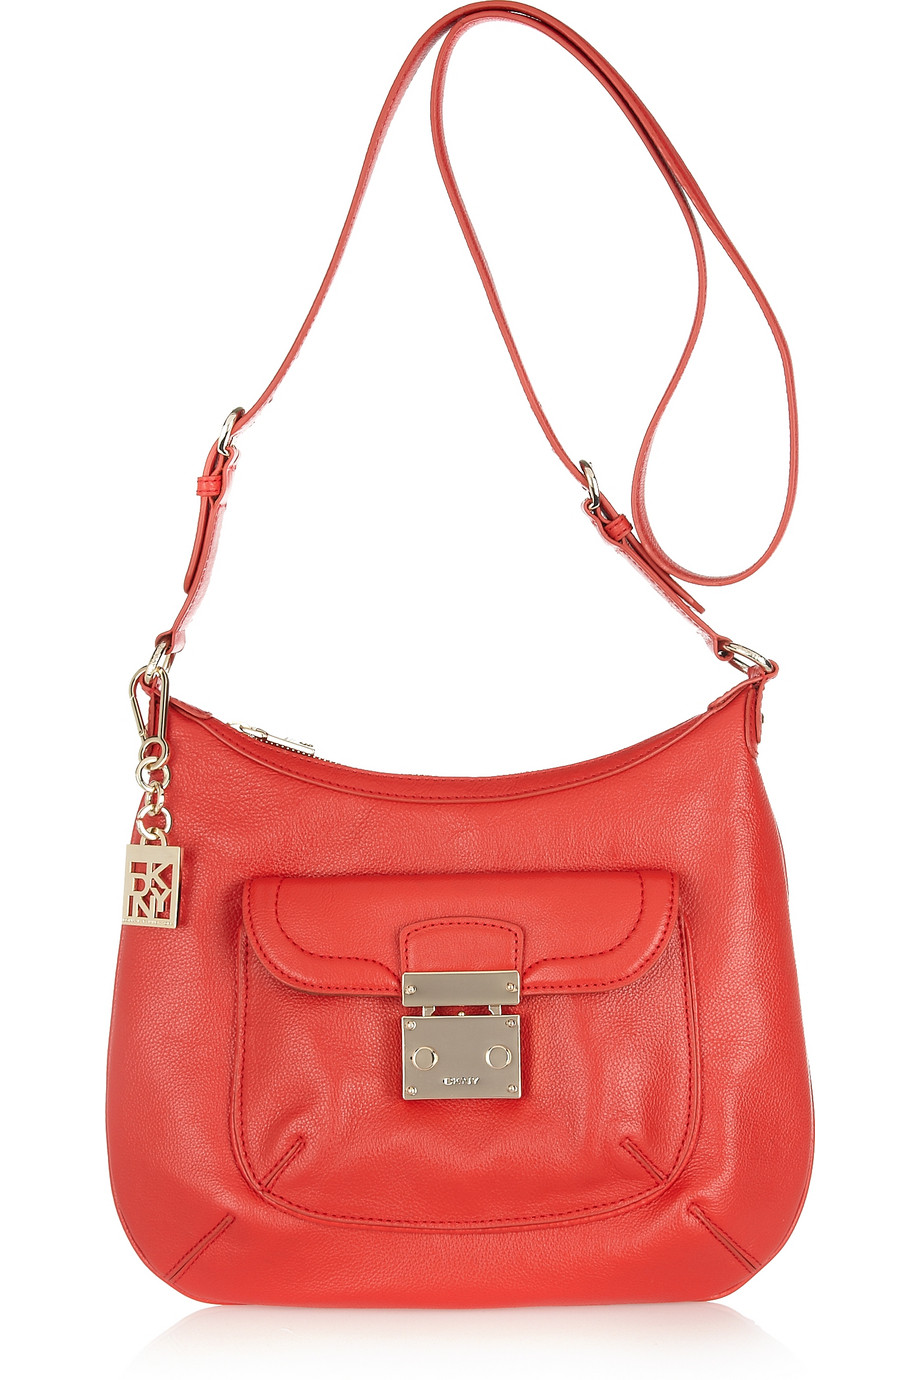 Dkny Leather Shoulder Bag in Red | Lyst